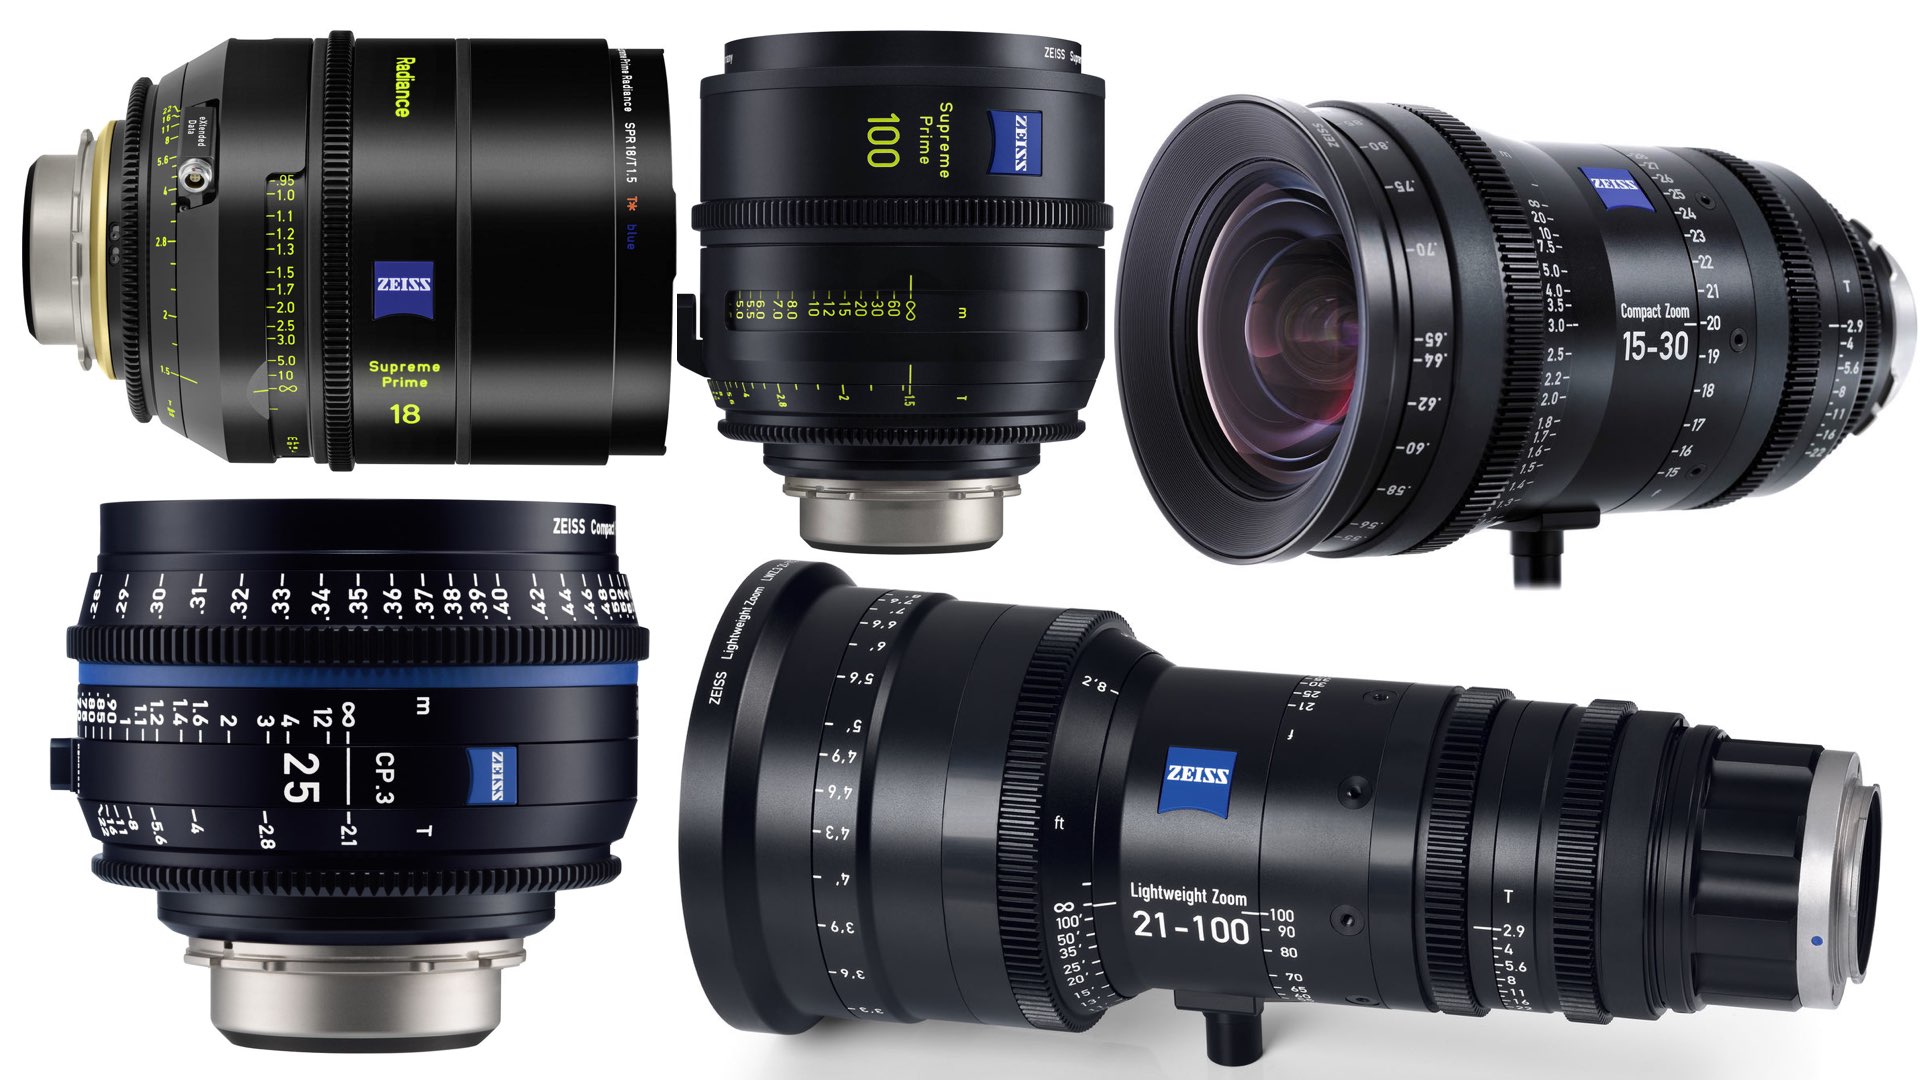 Picture for category Lenses & Lens Accessories>>Digital Cine Lenses